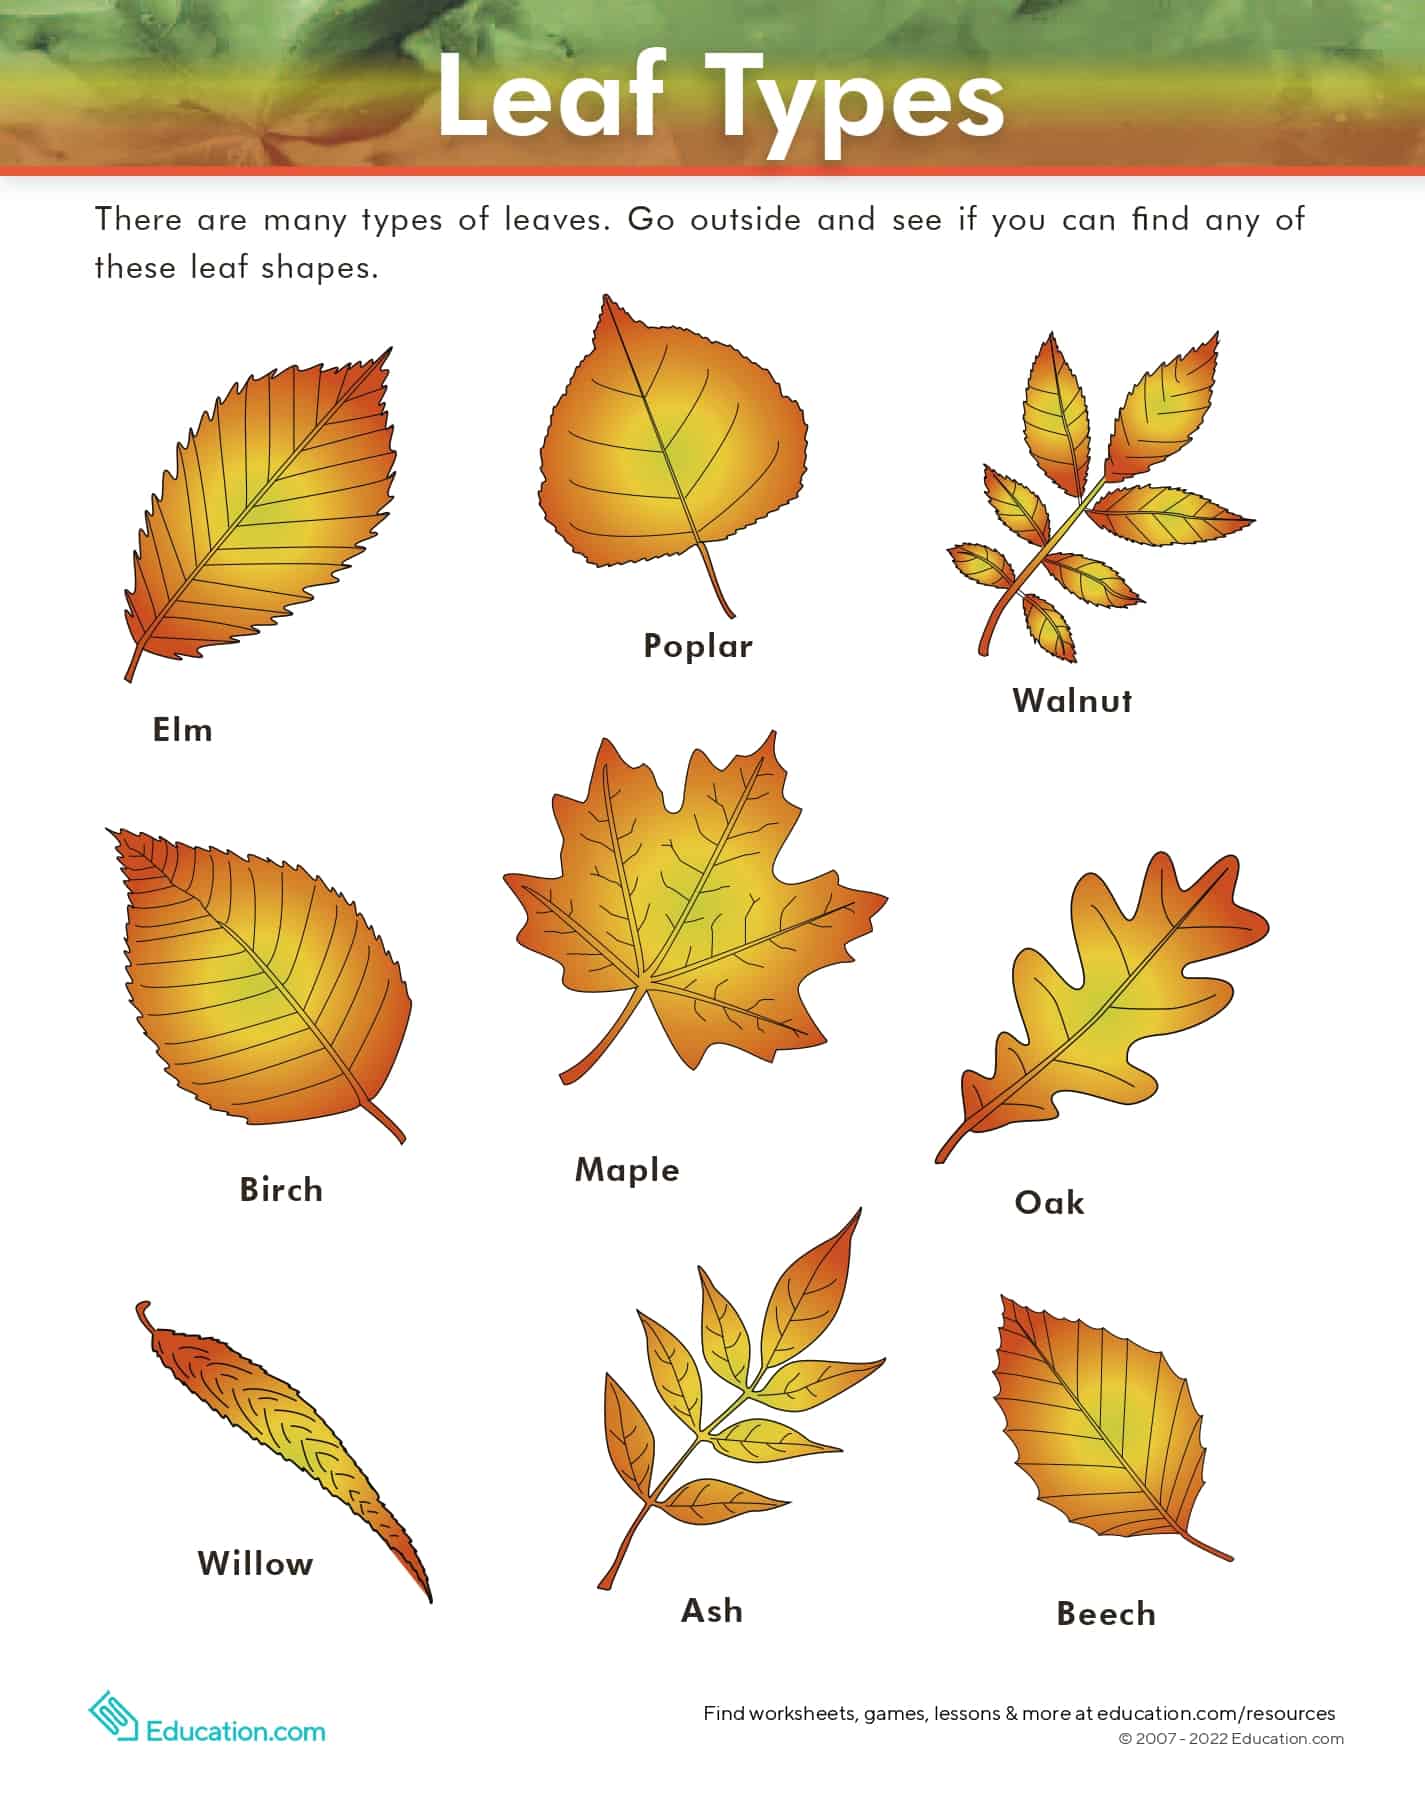 leaf-types_page-0001